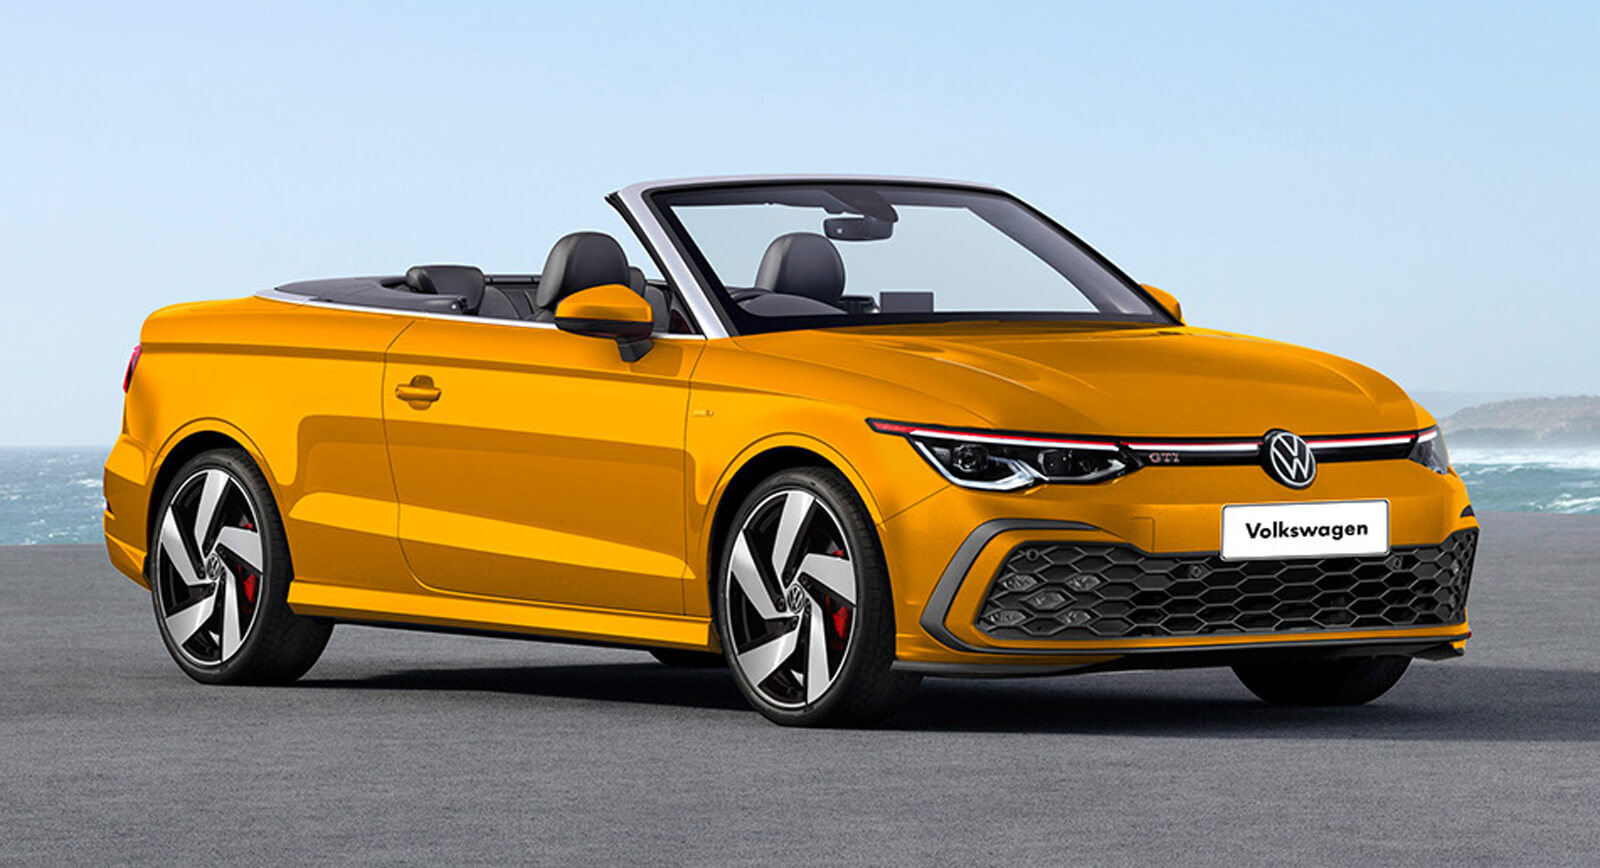 Waarnemen Klik Onafhankelijkheid How About An Open-Top VW Golf GTI Based On The Old Audi A3 Cabriolet? |  Carscoops